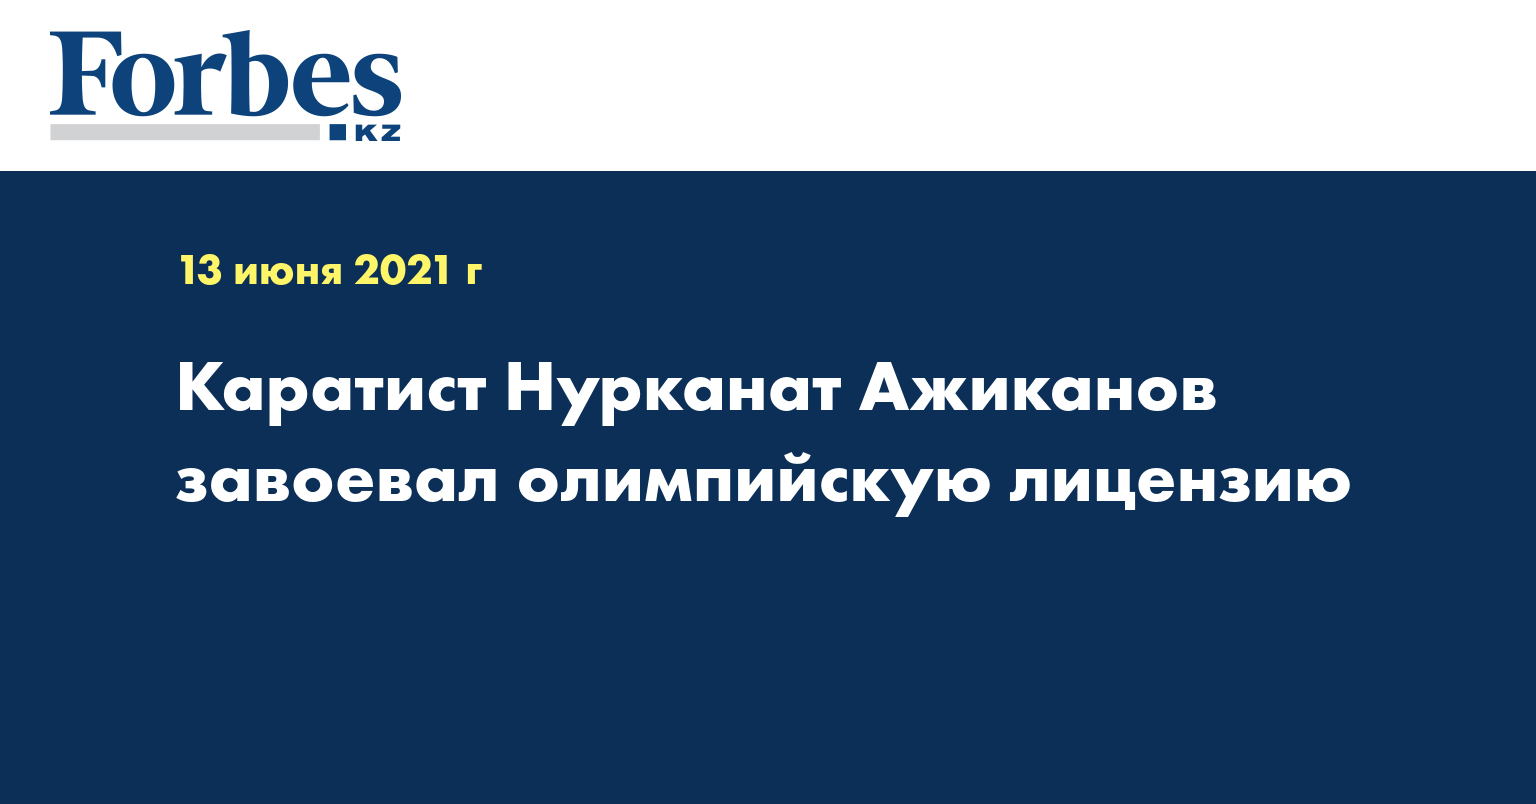 Каратист Нурканат Ажиканов завоевал олимпийскую лицензию 